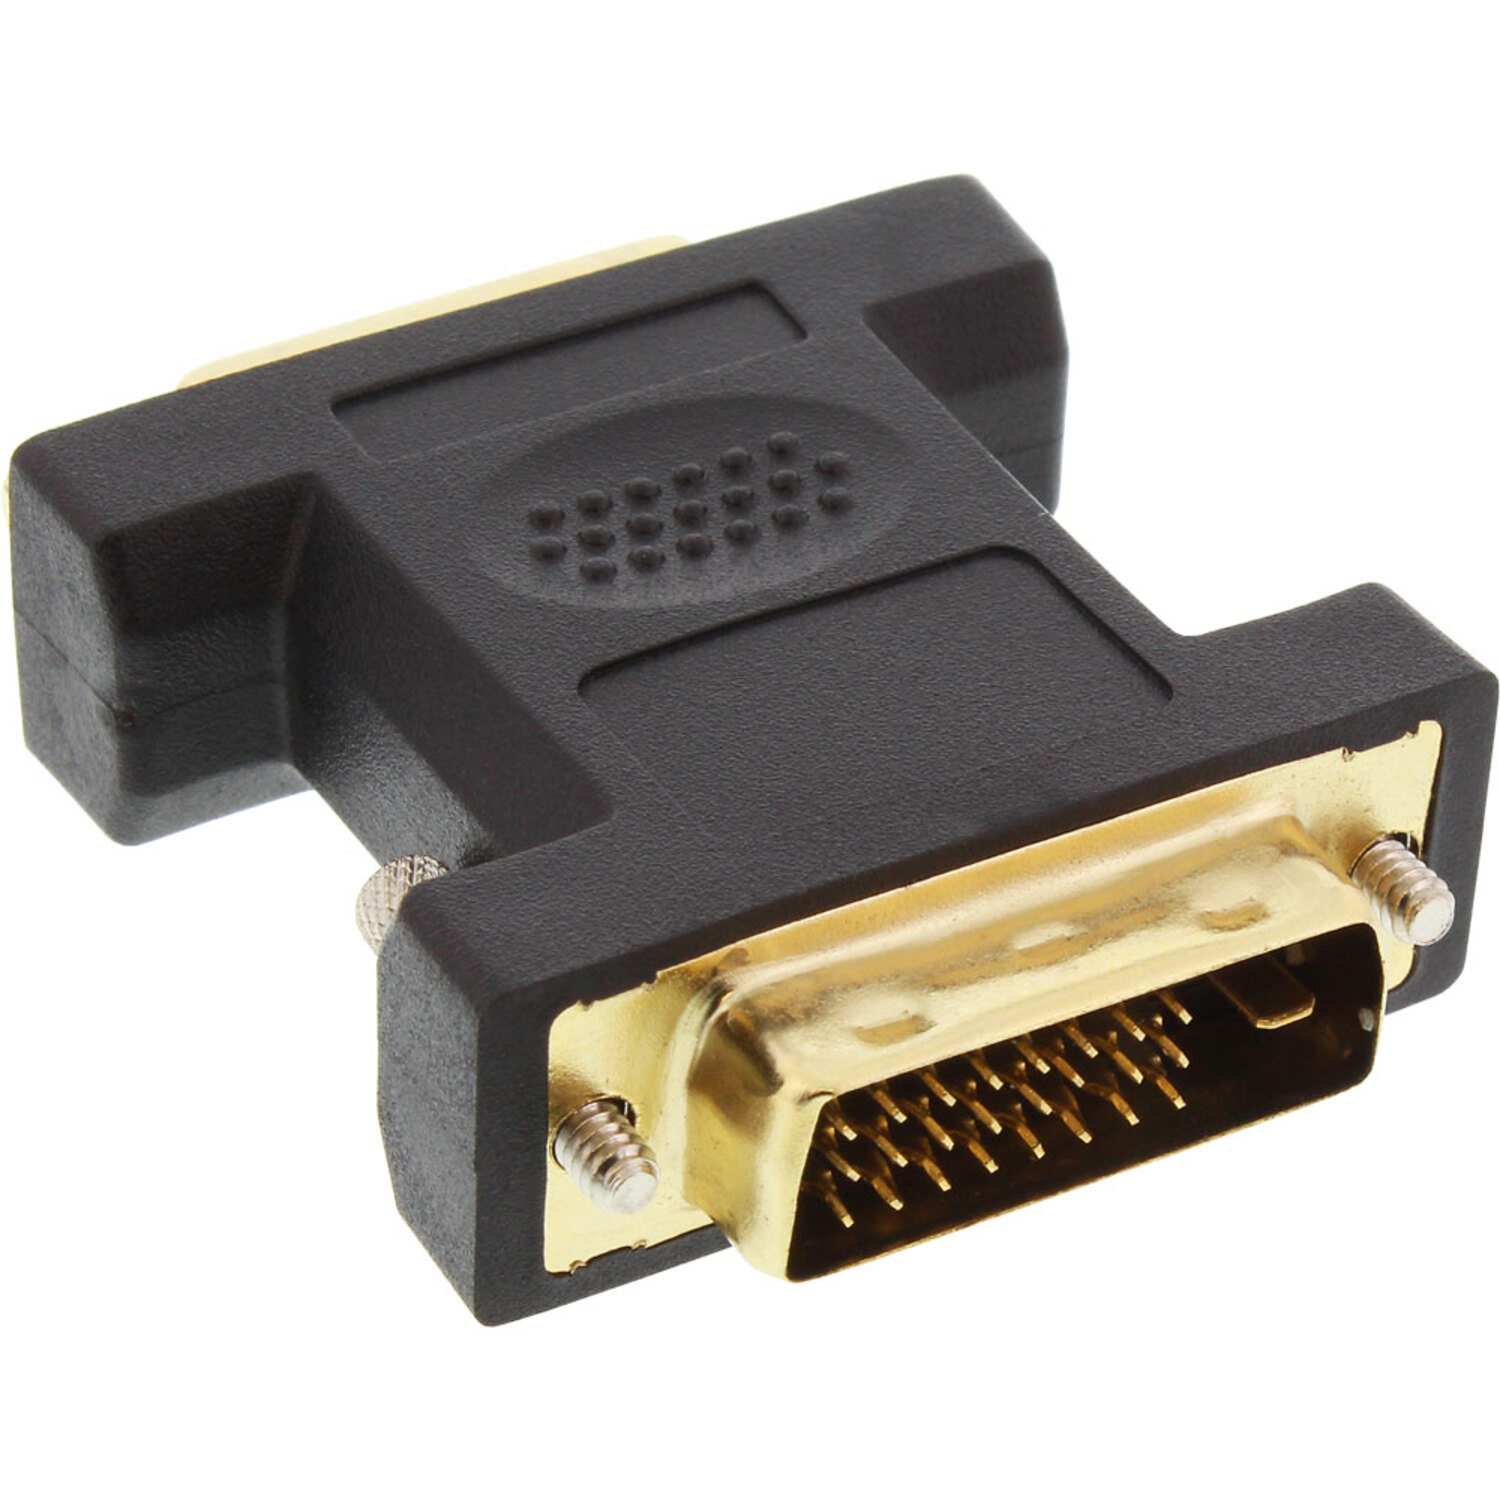 INLINE InLine® DVI / / 24+5 verg. Stecker, DFP Digital Buchse VGA / / 24+1 an DVI Adapter, DVI-D zu